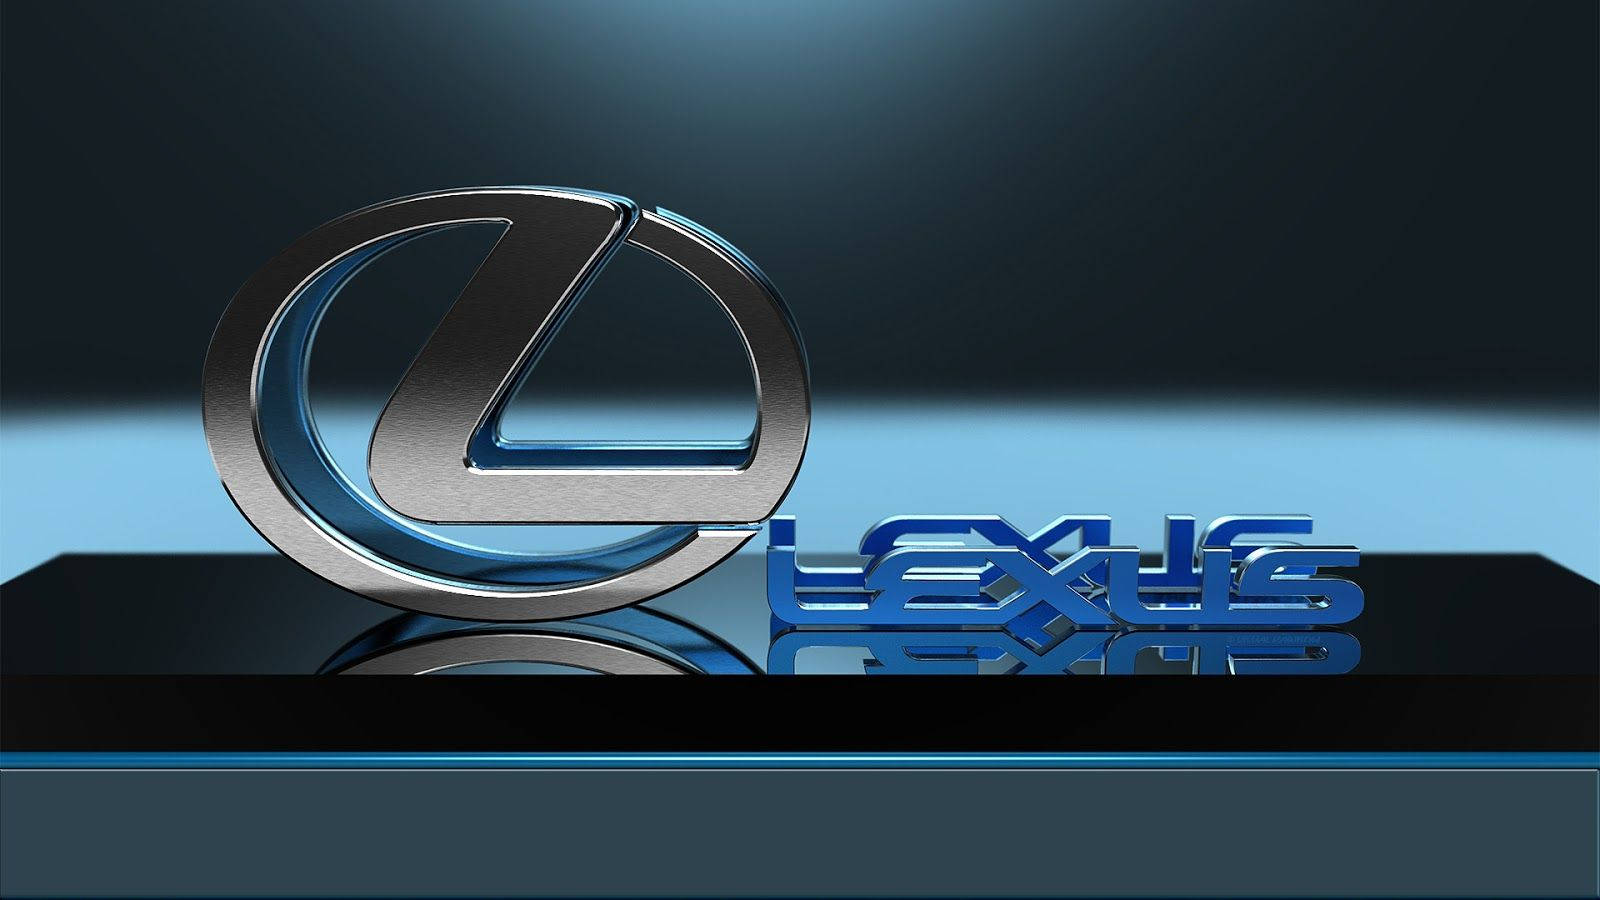 Cool Silver Lexus Logo Wallpaper